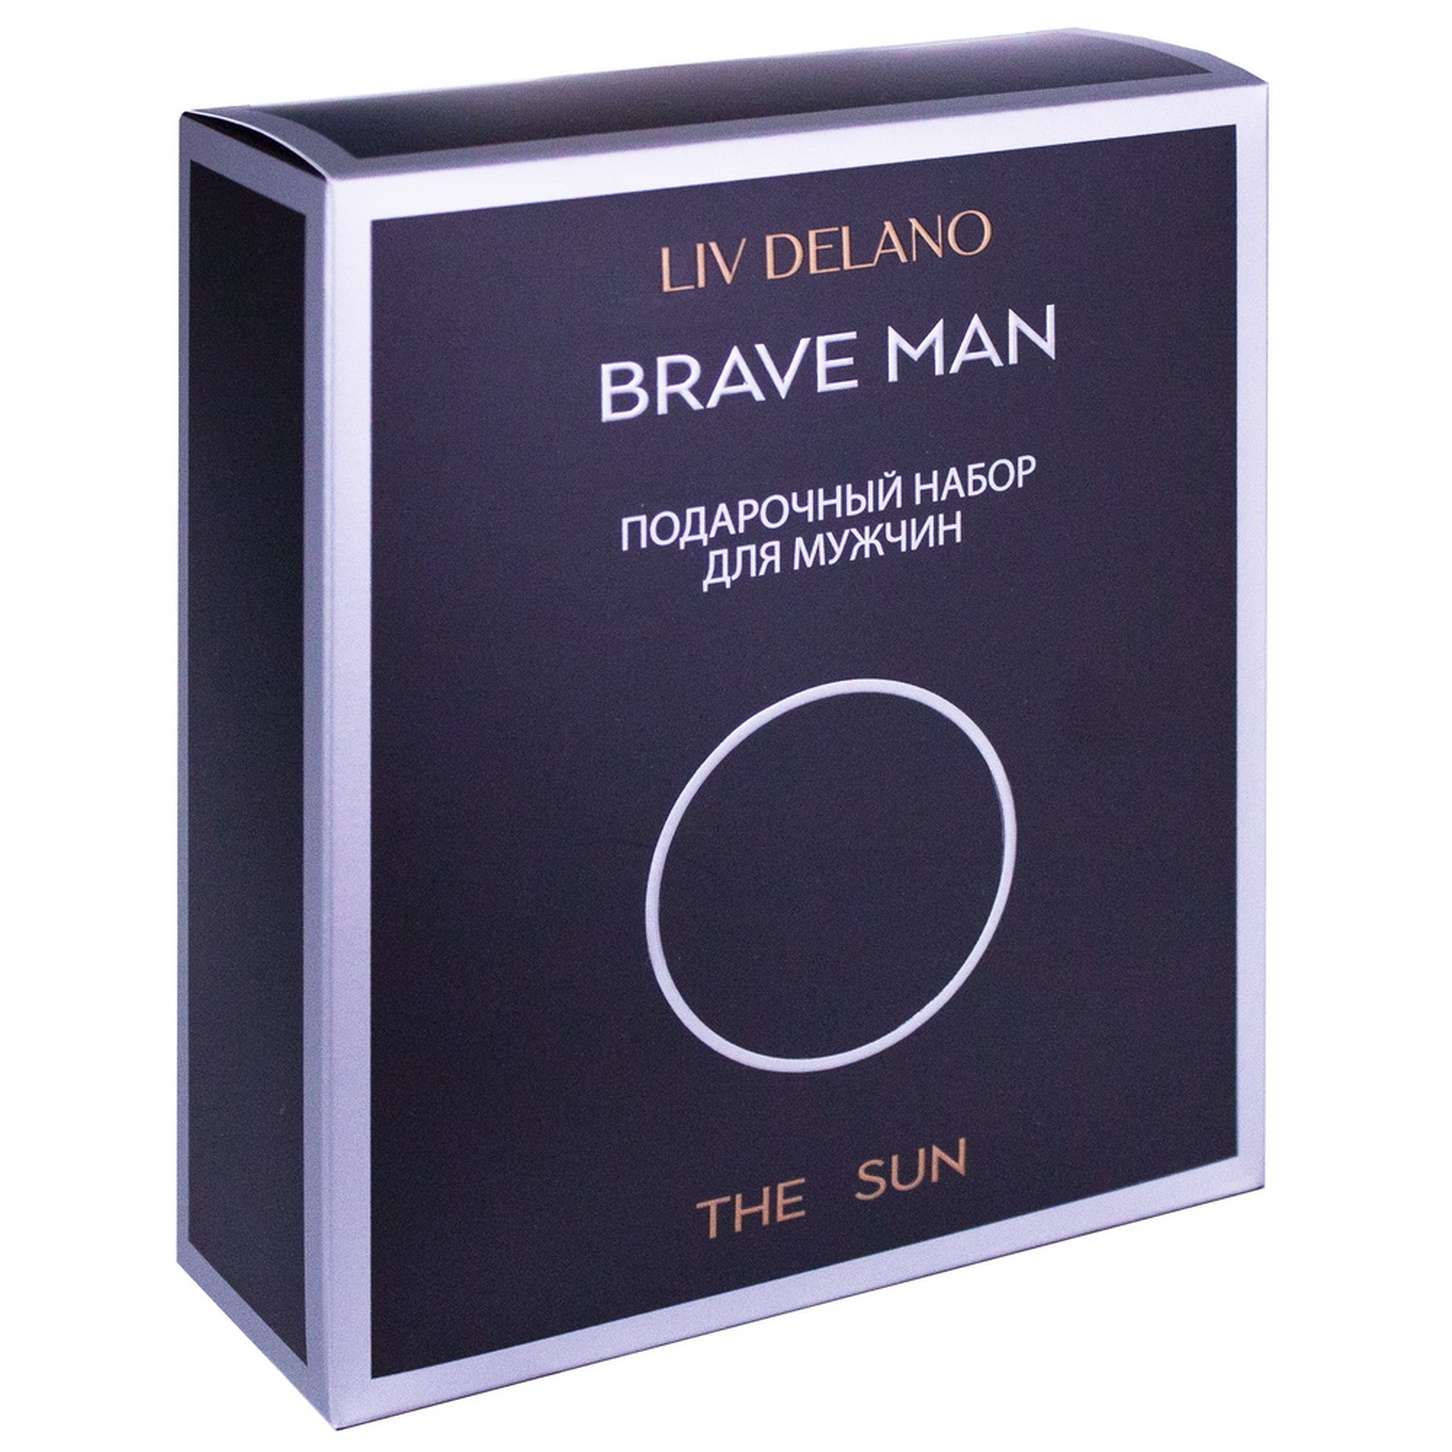 Подарочный набор для мужчин Brave man THE SUN Гель д/душа 250г+Шамп.д/всех тип.250г Белгейтс/12/ОПТ